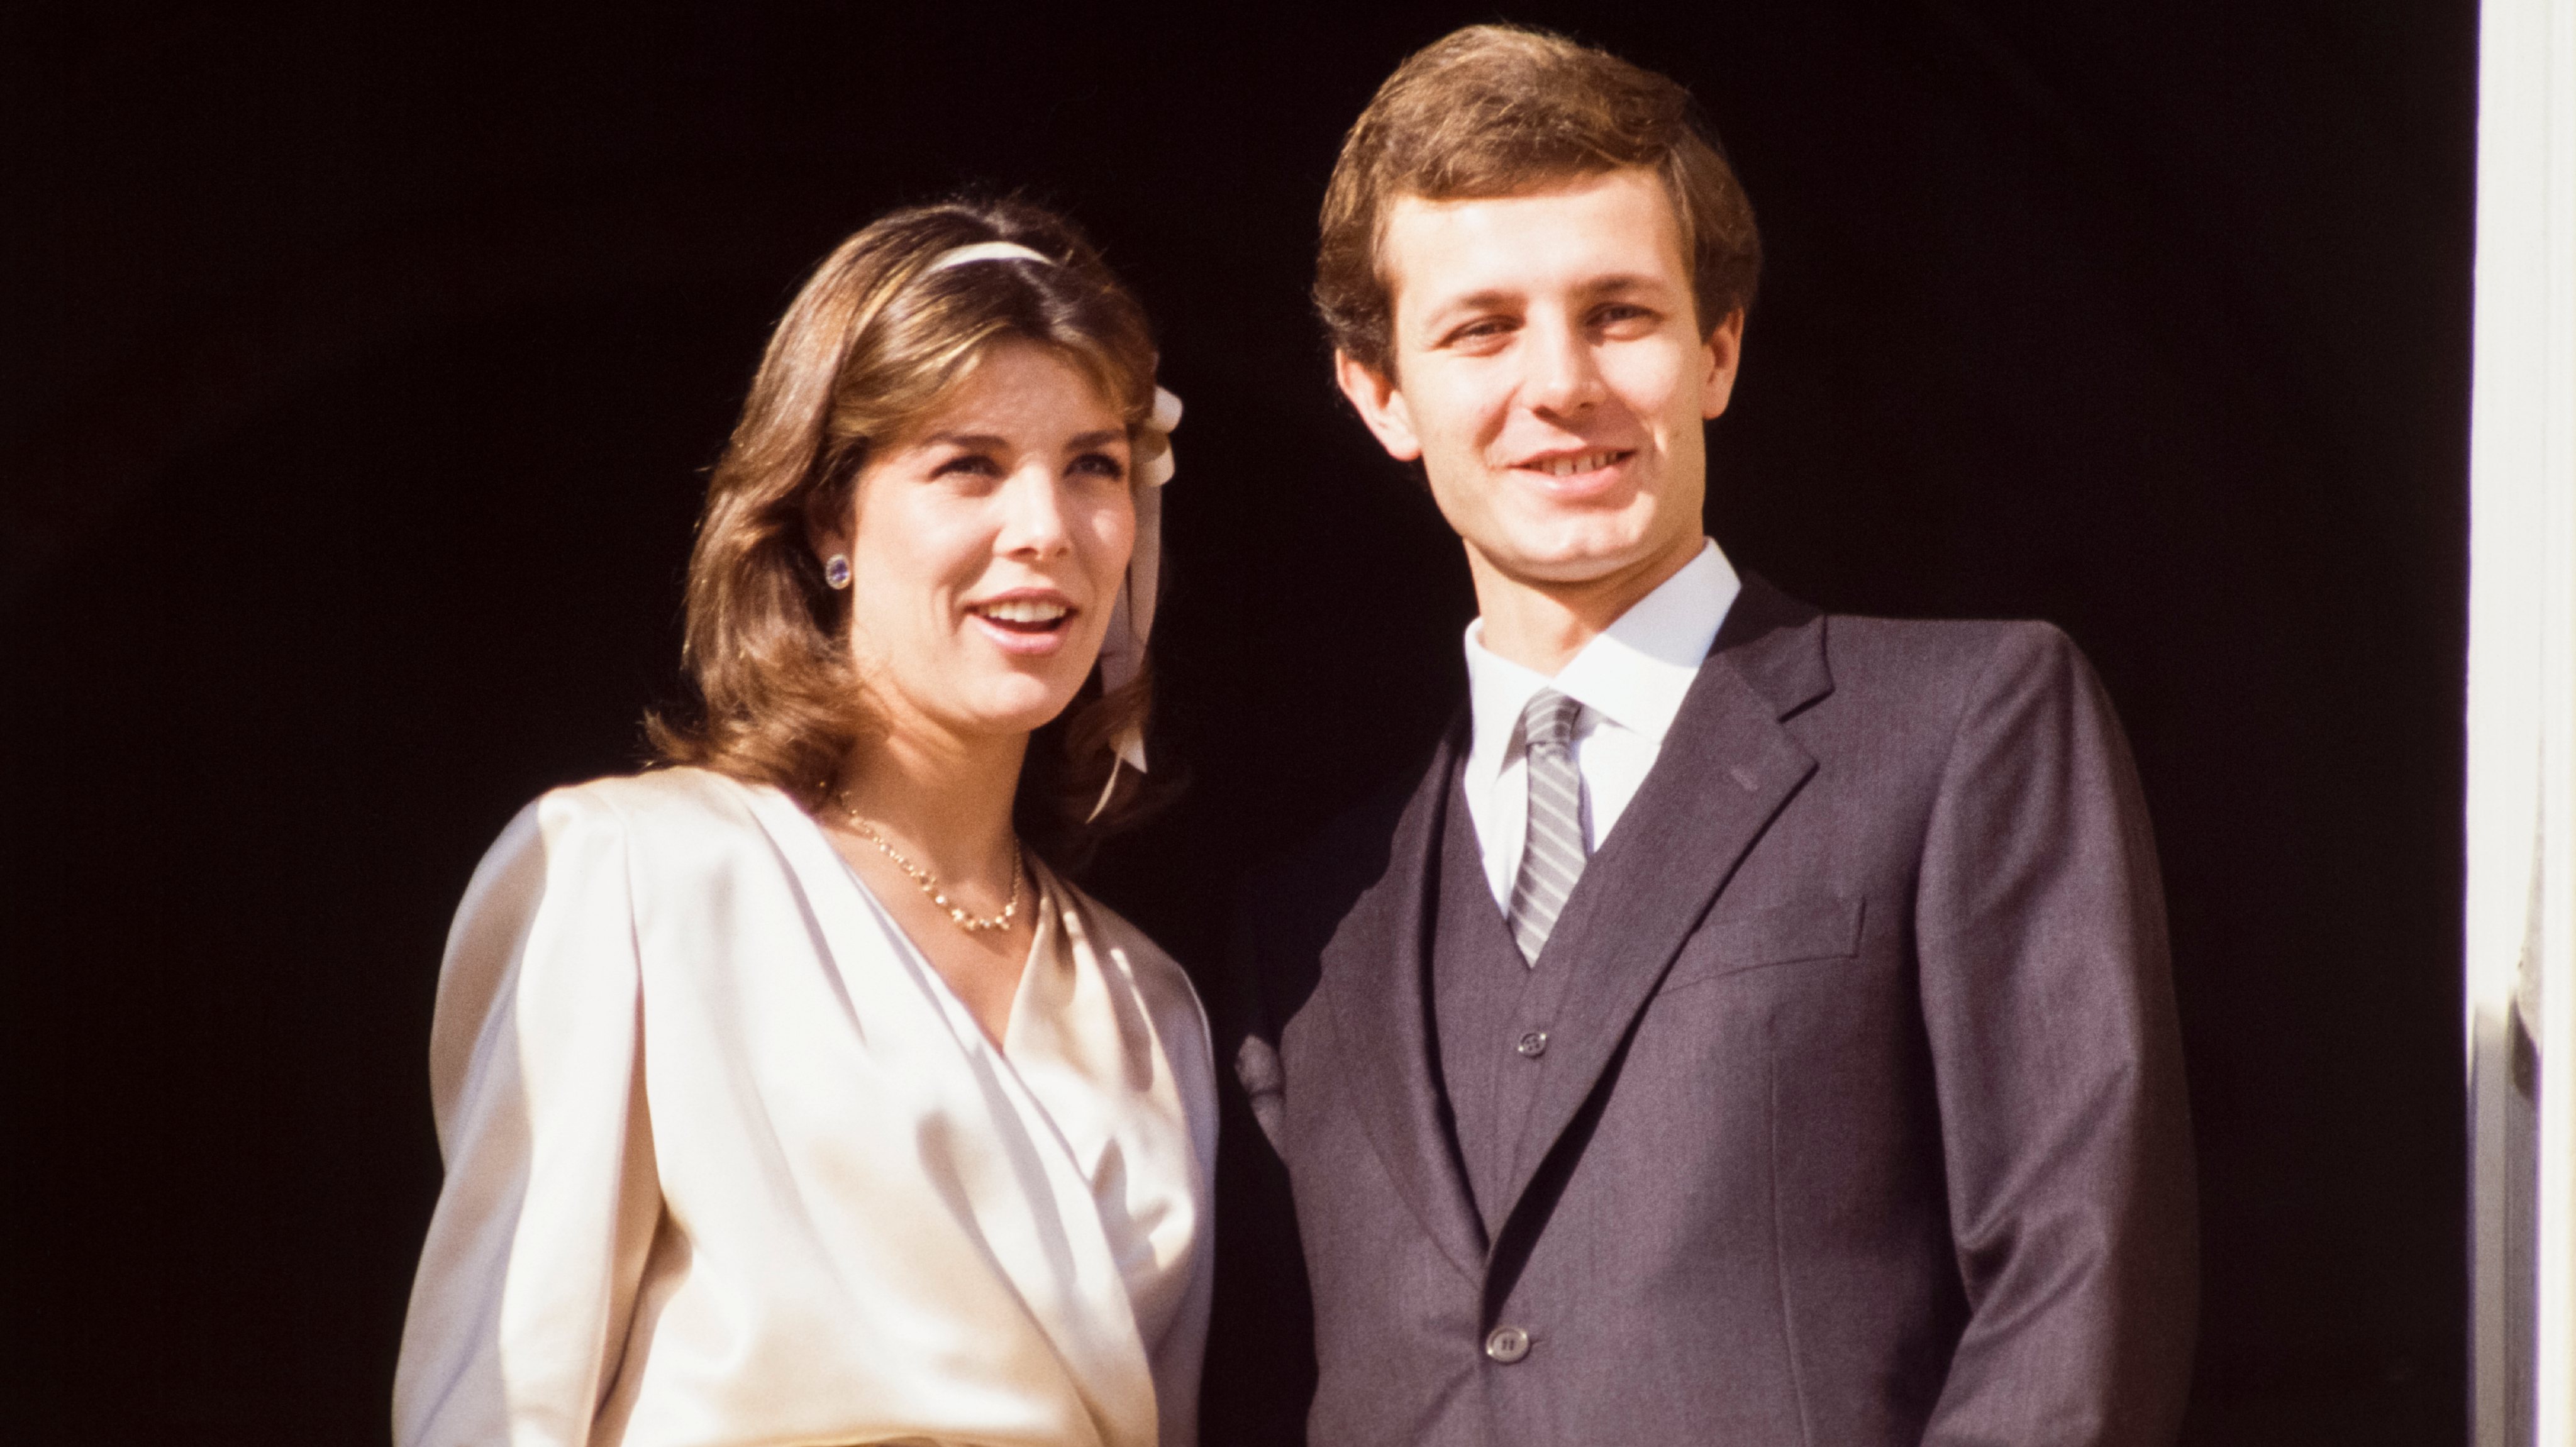 Mariage de Caroline de Monaco et Stefano Casiraghi en 1983